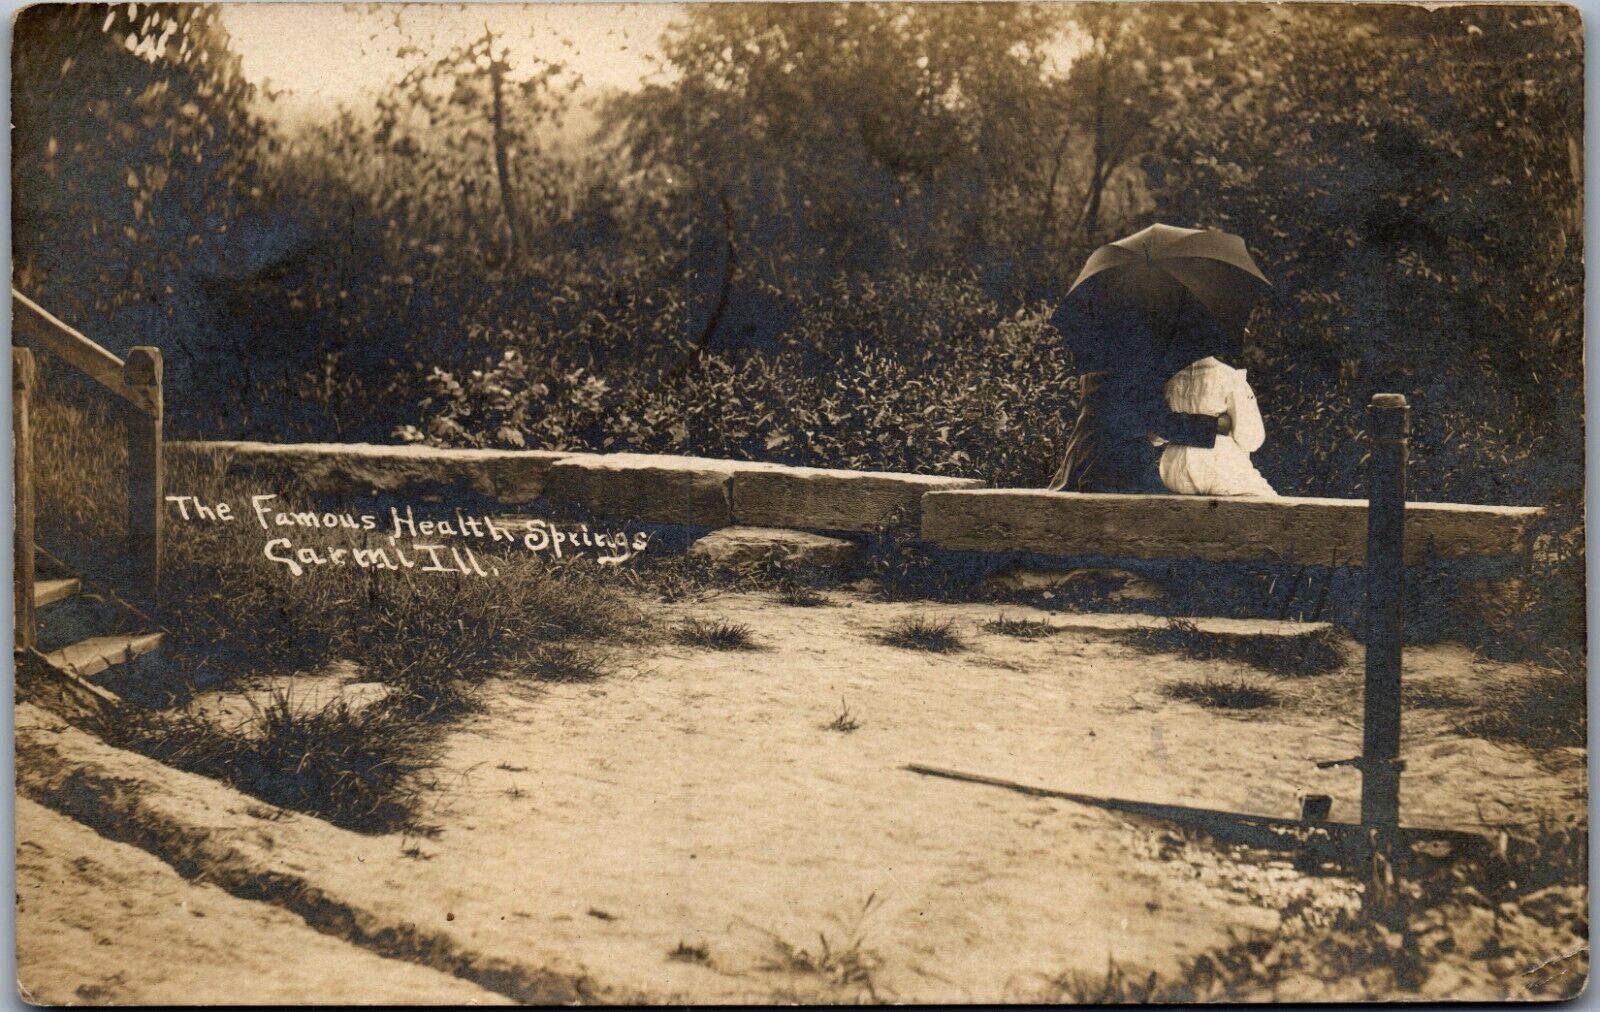 Famous Health Springs, Carmi, Illinois RPPC (1908)